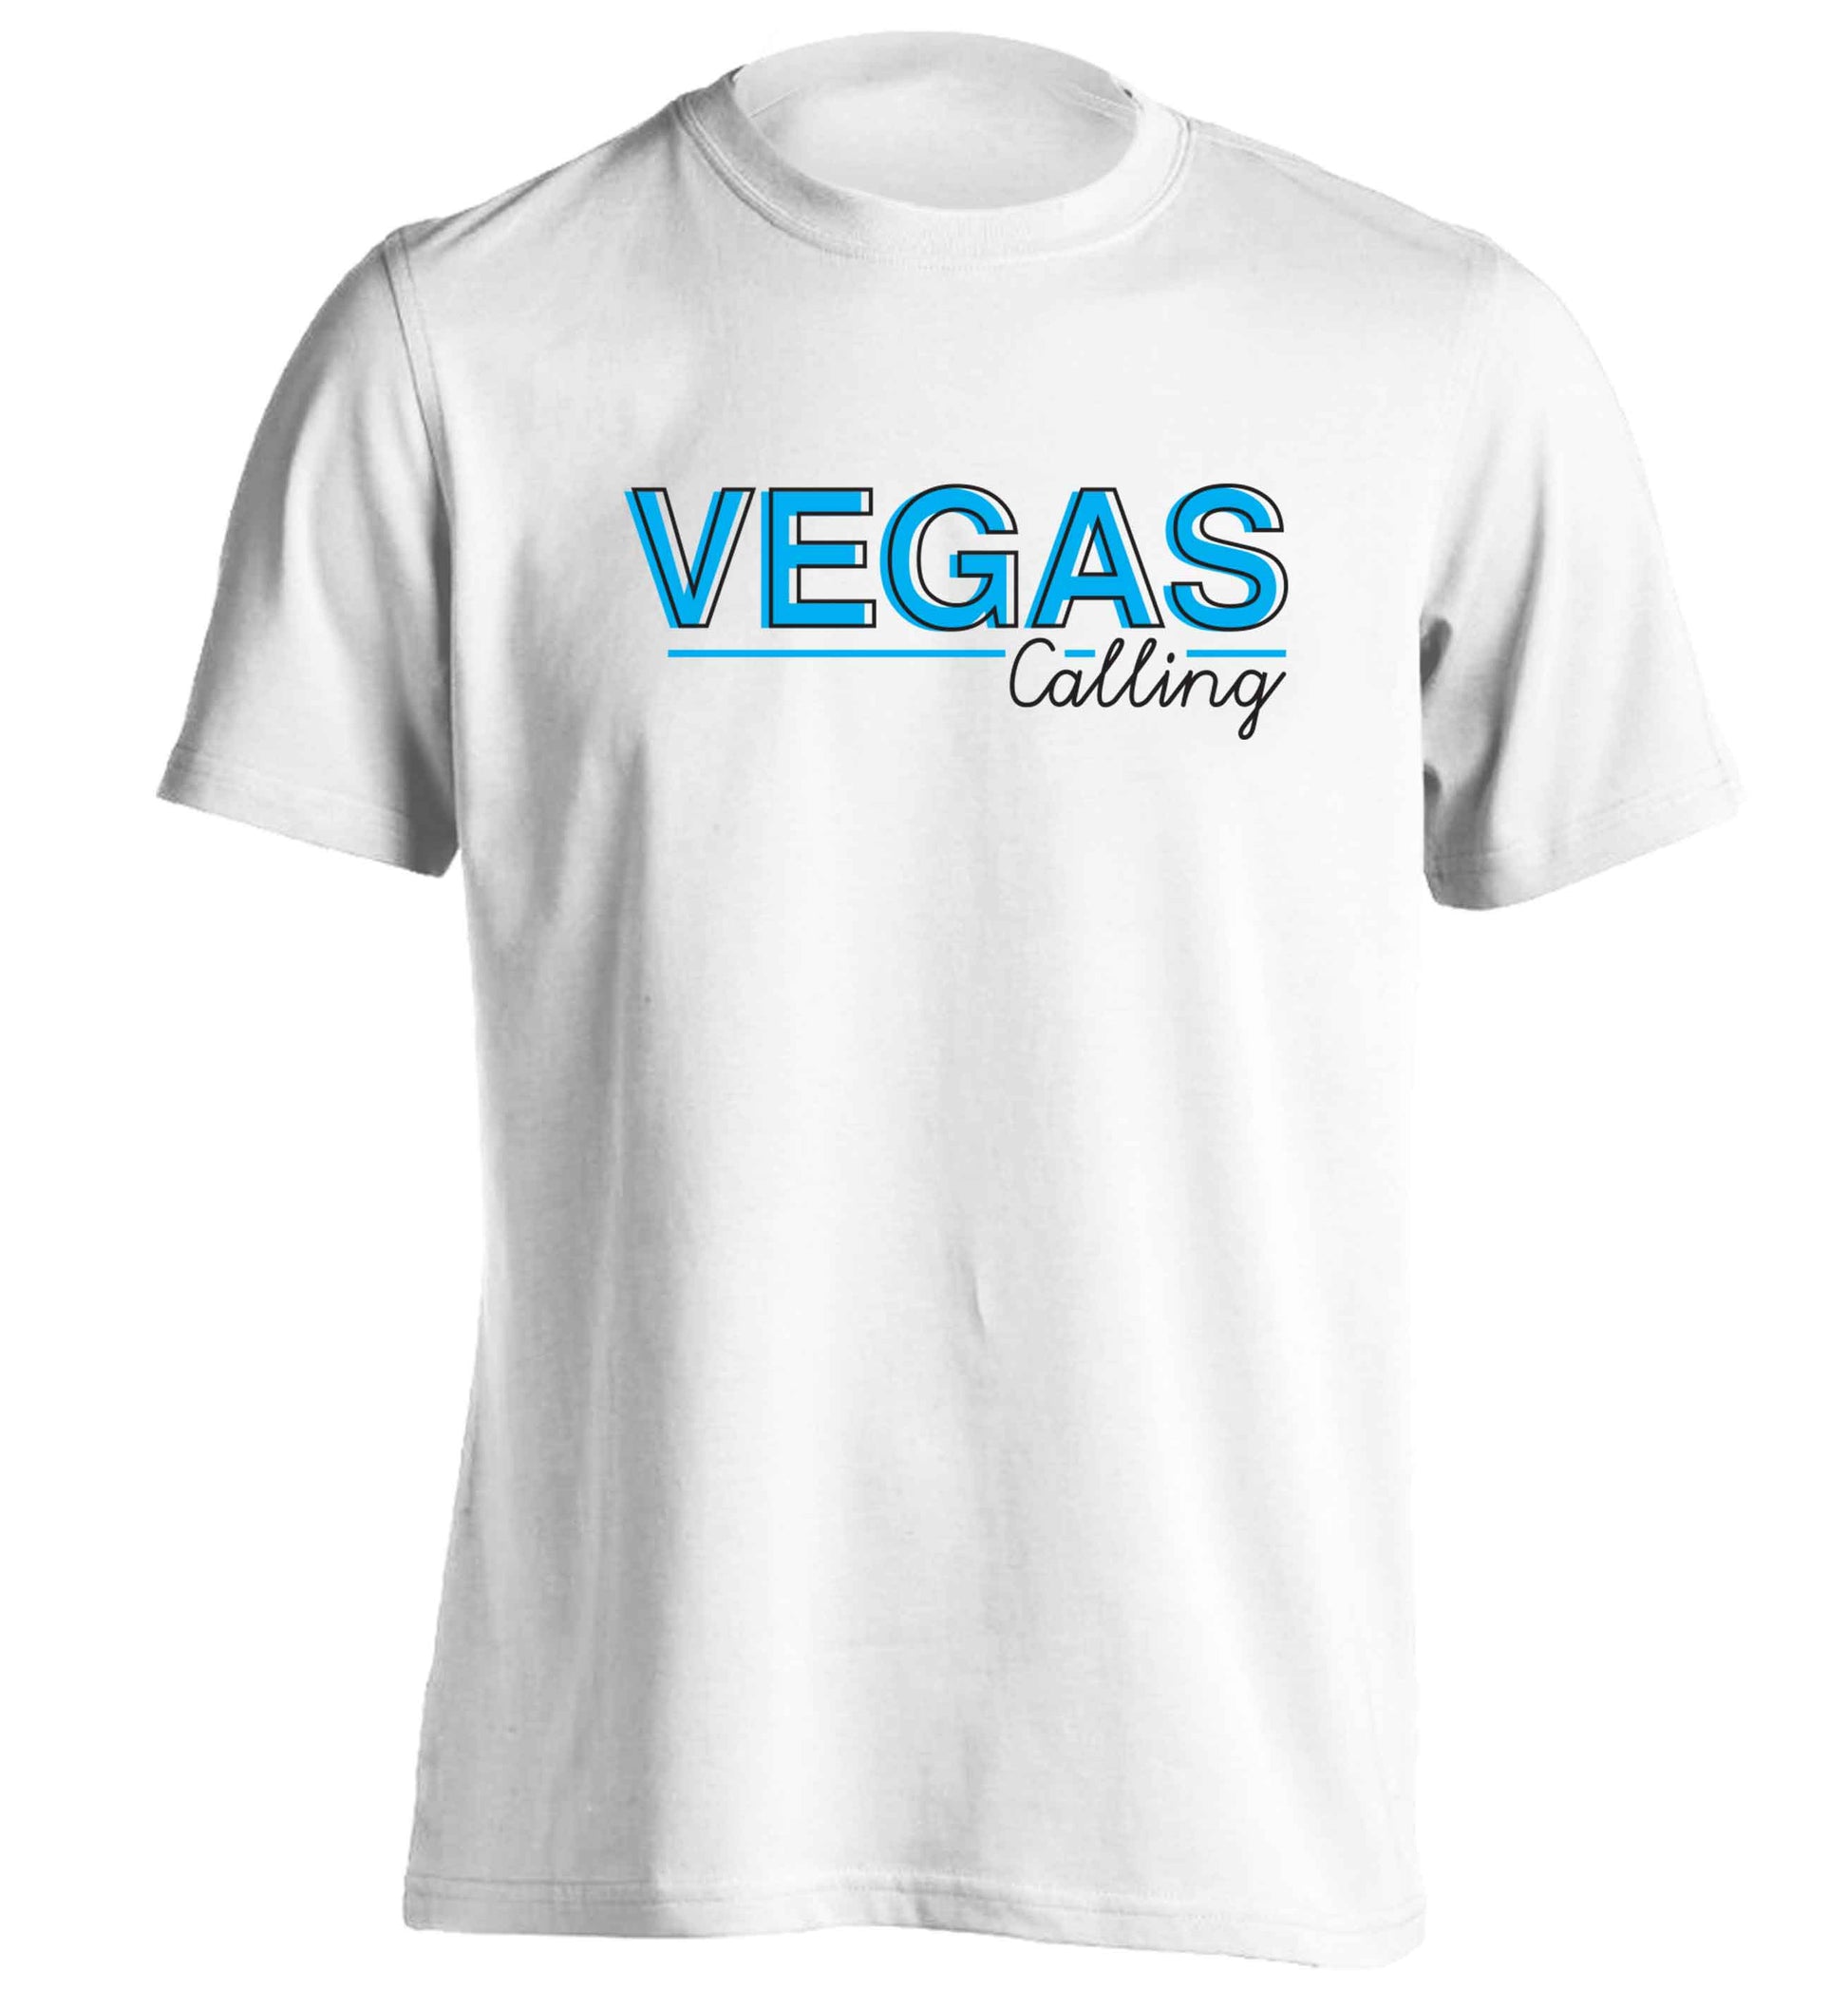 Vegas calling adults unisex white Tshirt 2XL